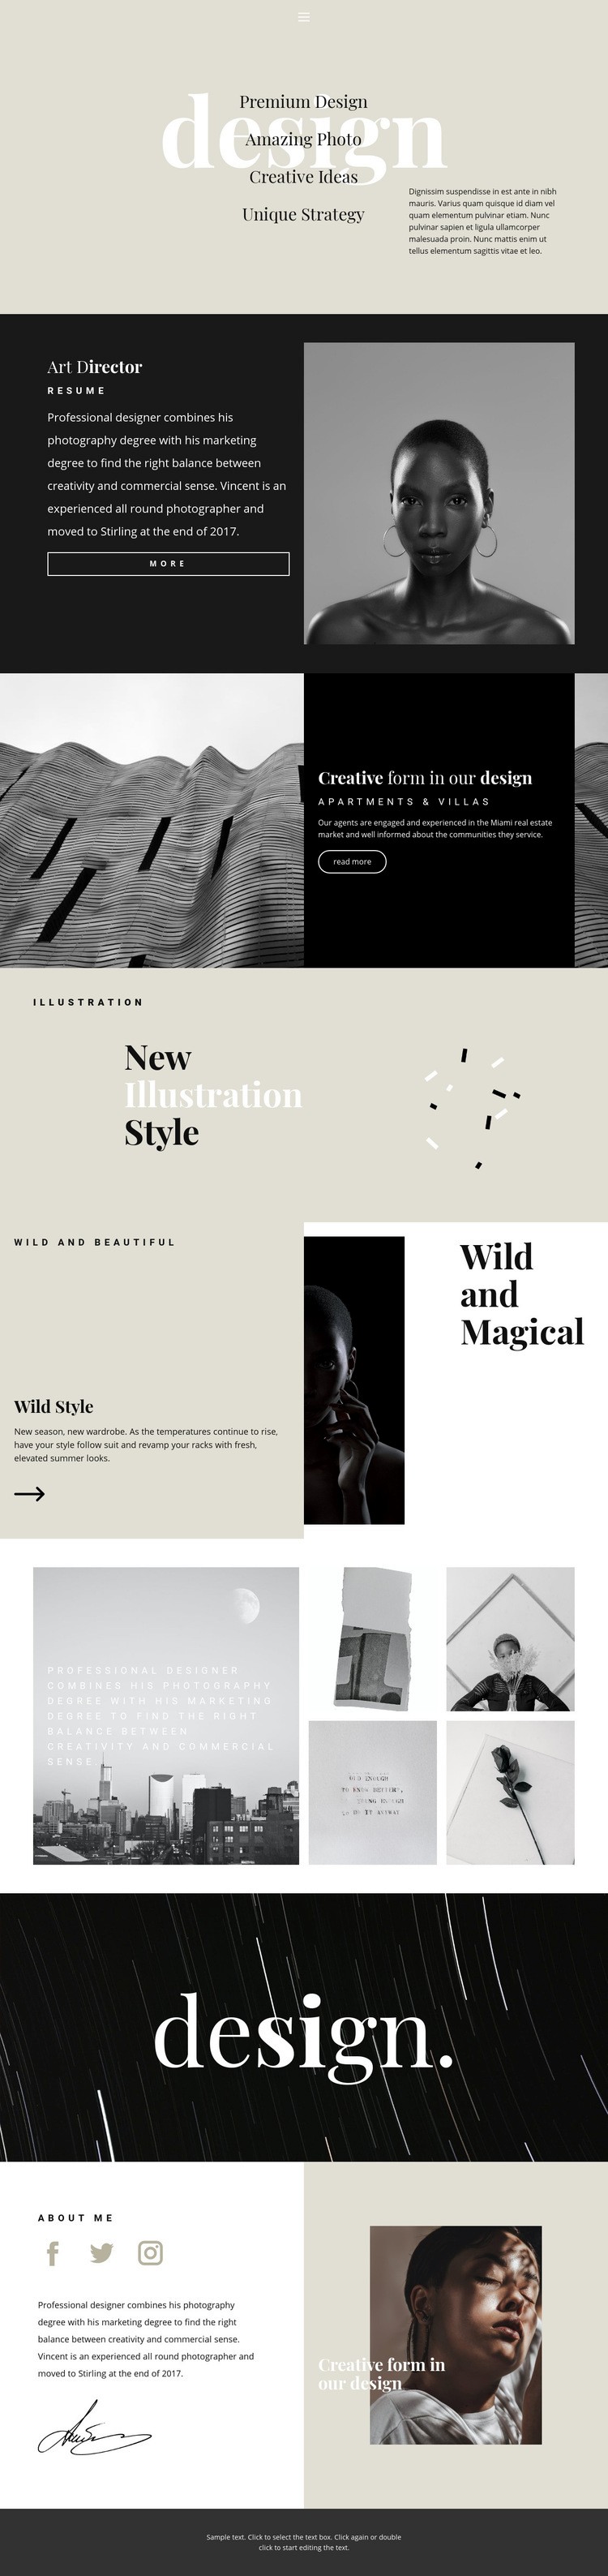 Directions of design studio Web Page Design